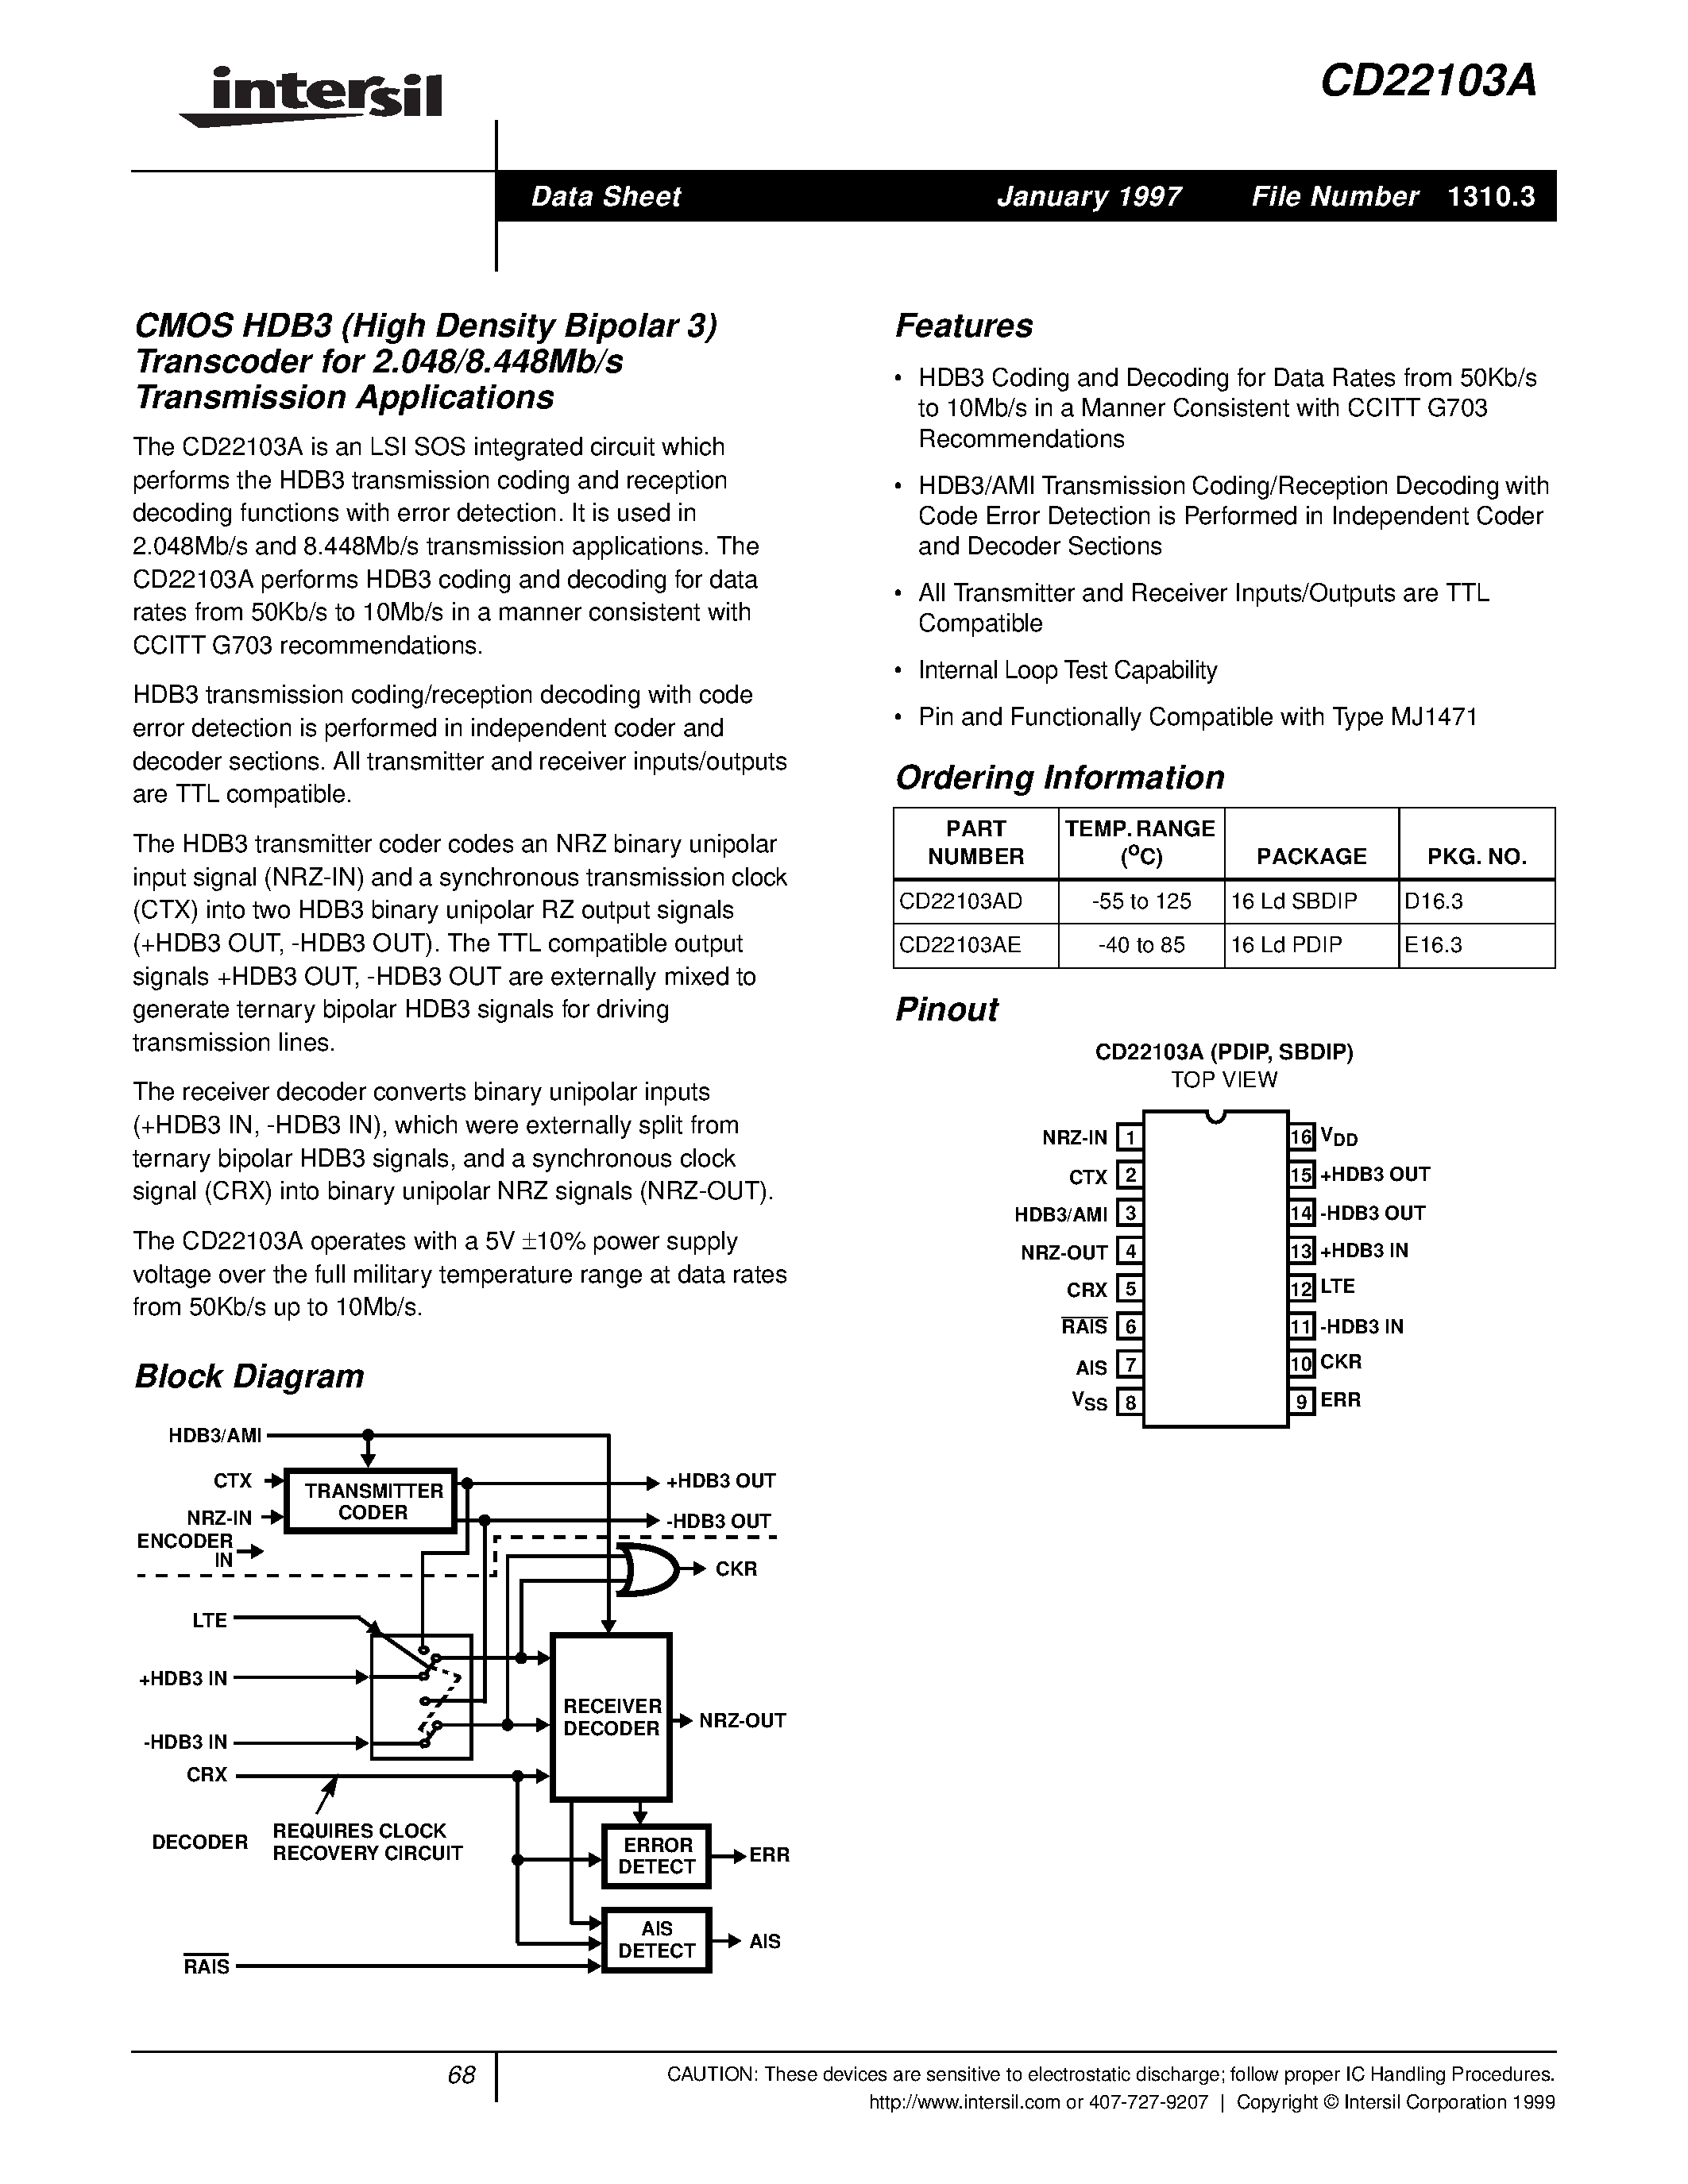 Даташит CD22103A - CMOS HDB3 High Density Bipolar 3 Transcoder for 2.048/8.448Mb/s Transmission Applications страница 1